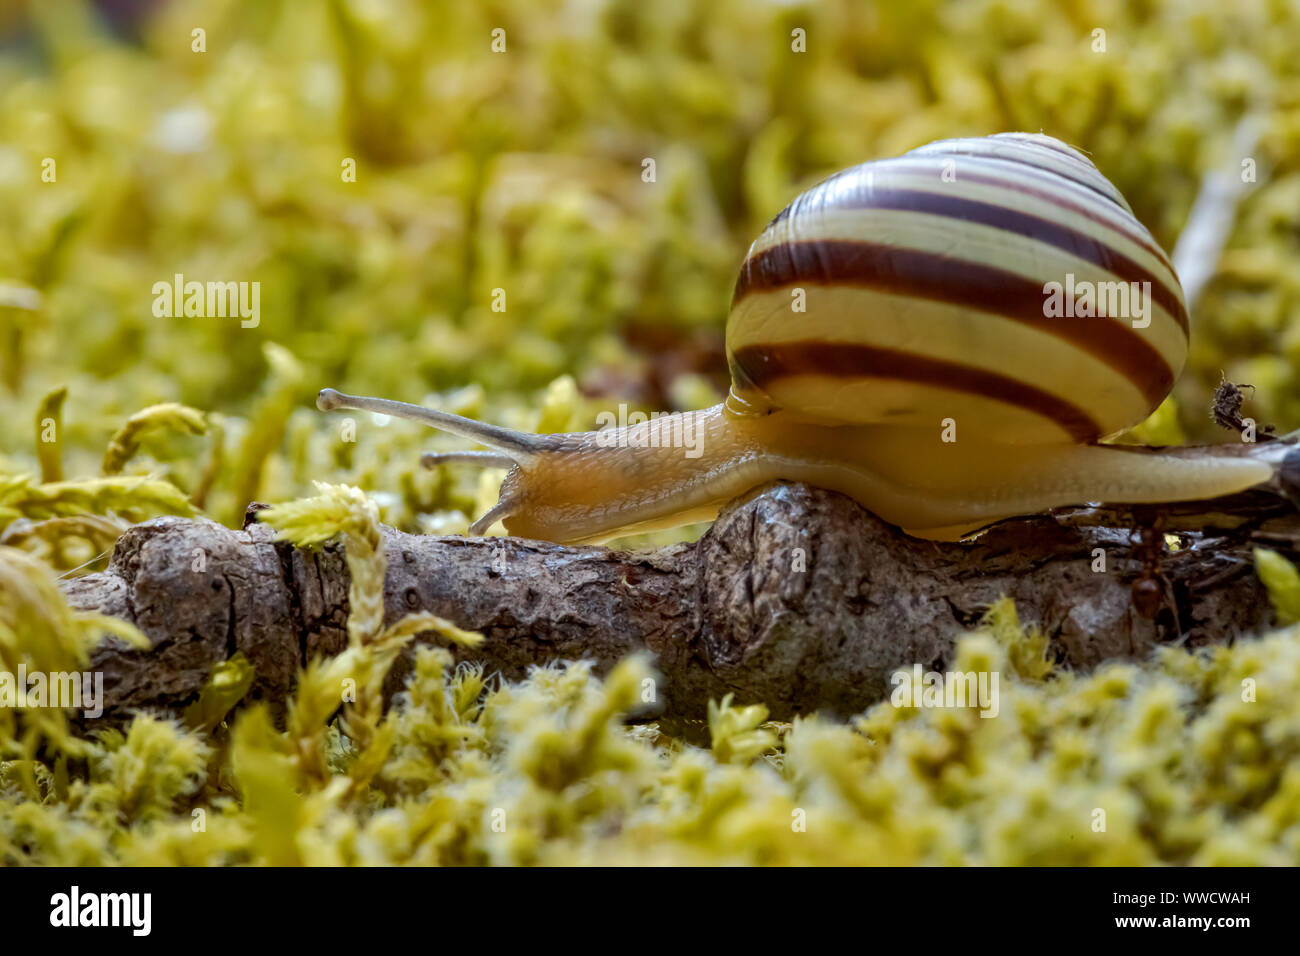 Snail slowly creeping along super macro close-up Stock Photo